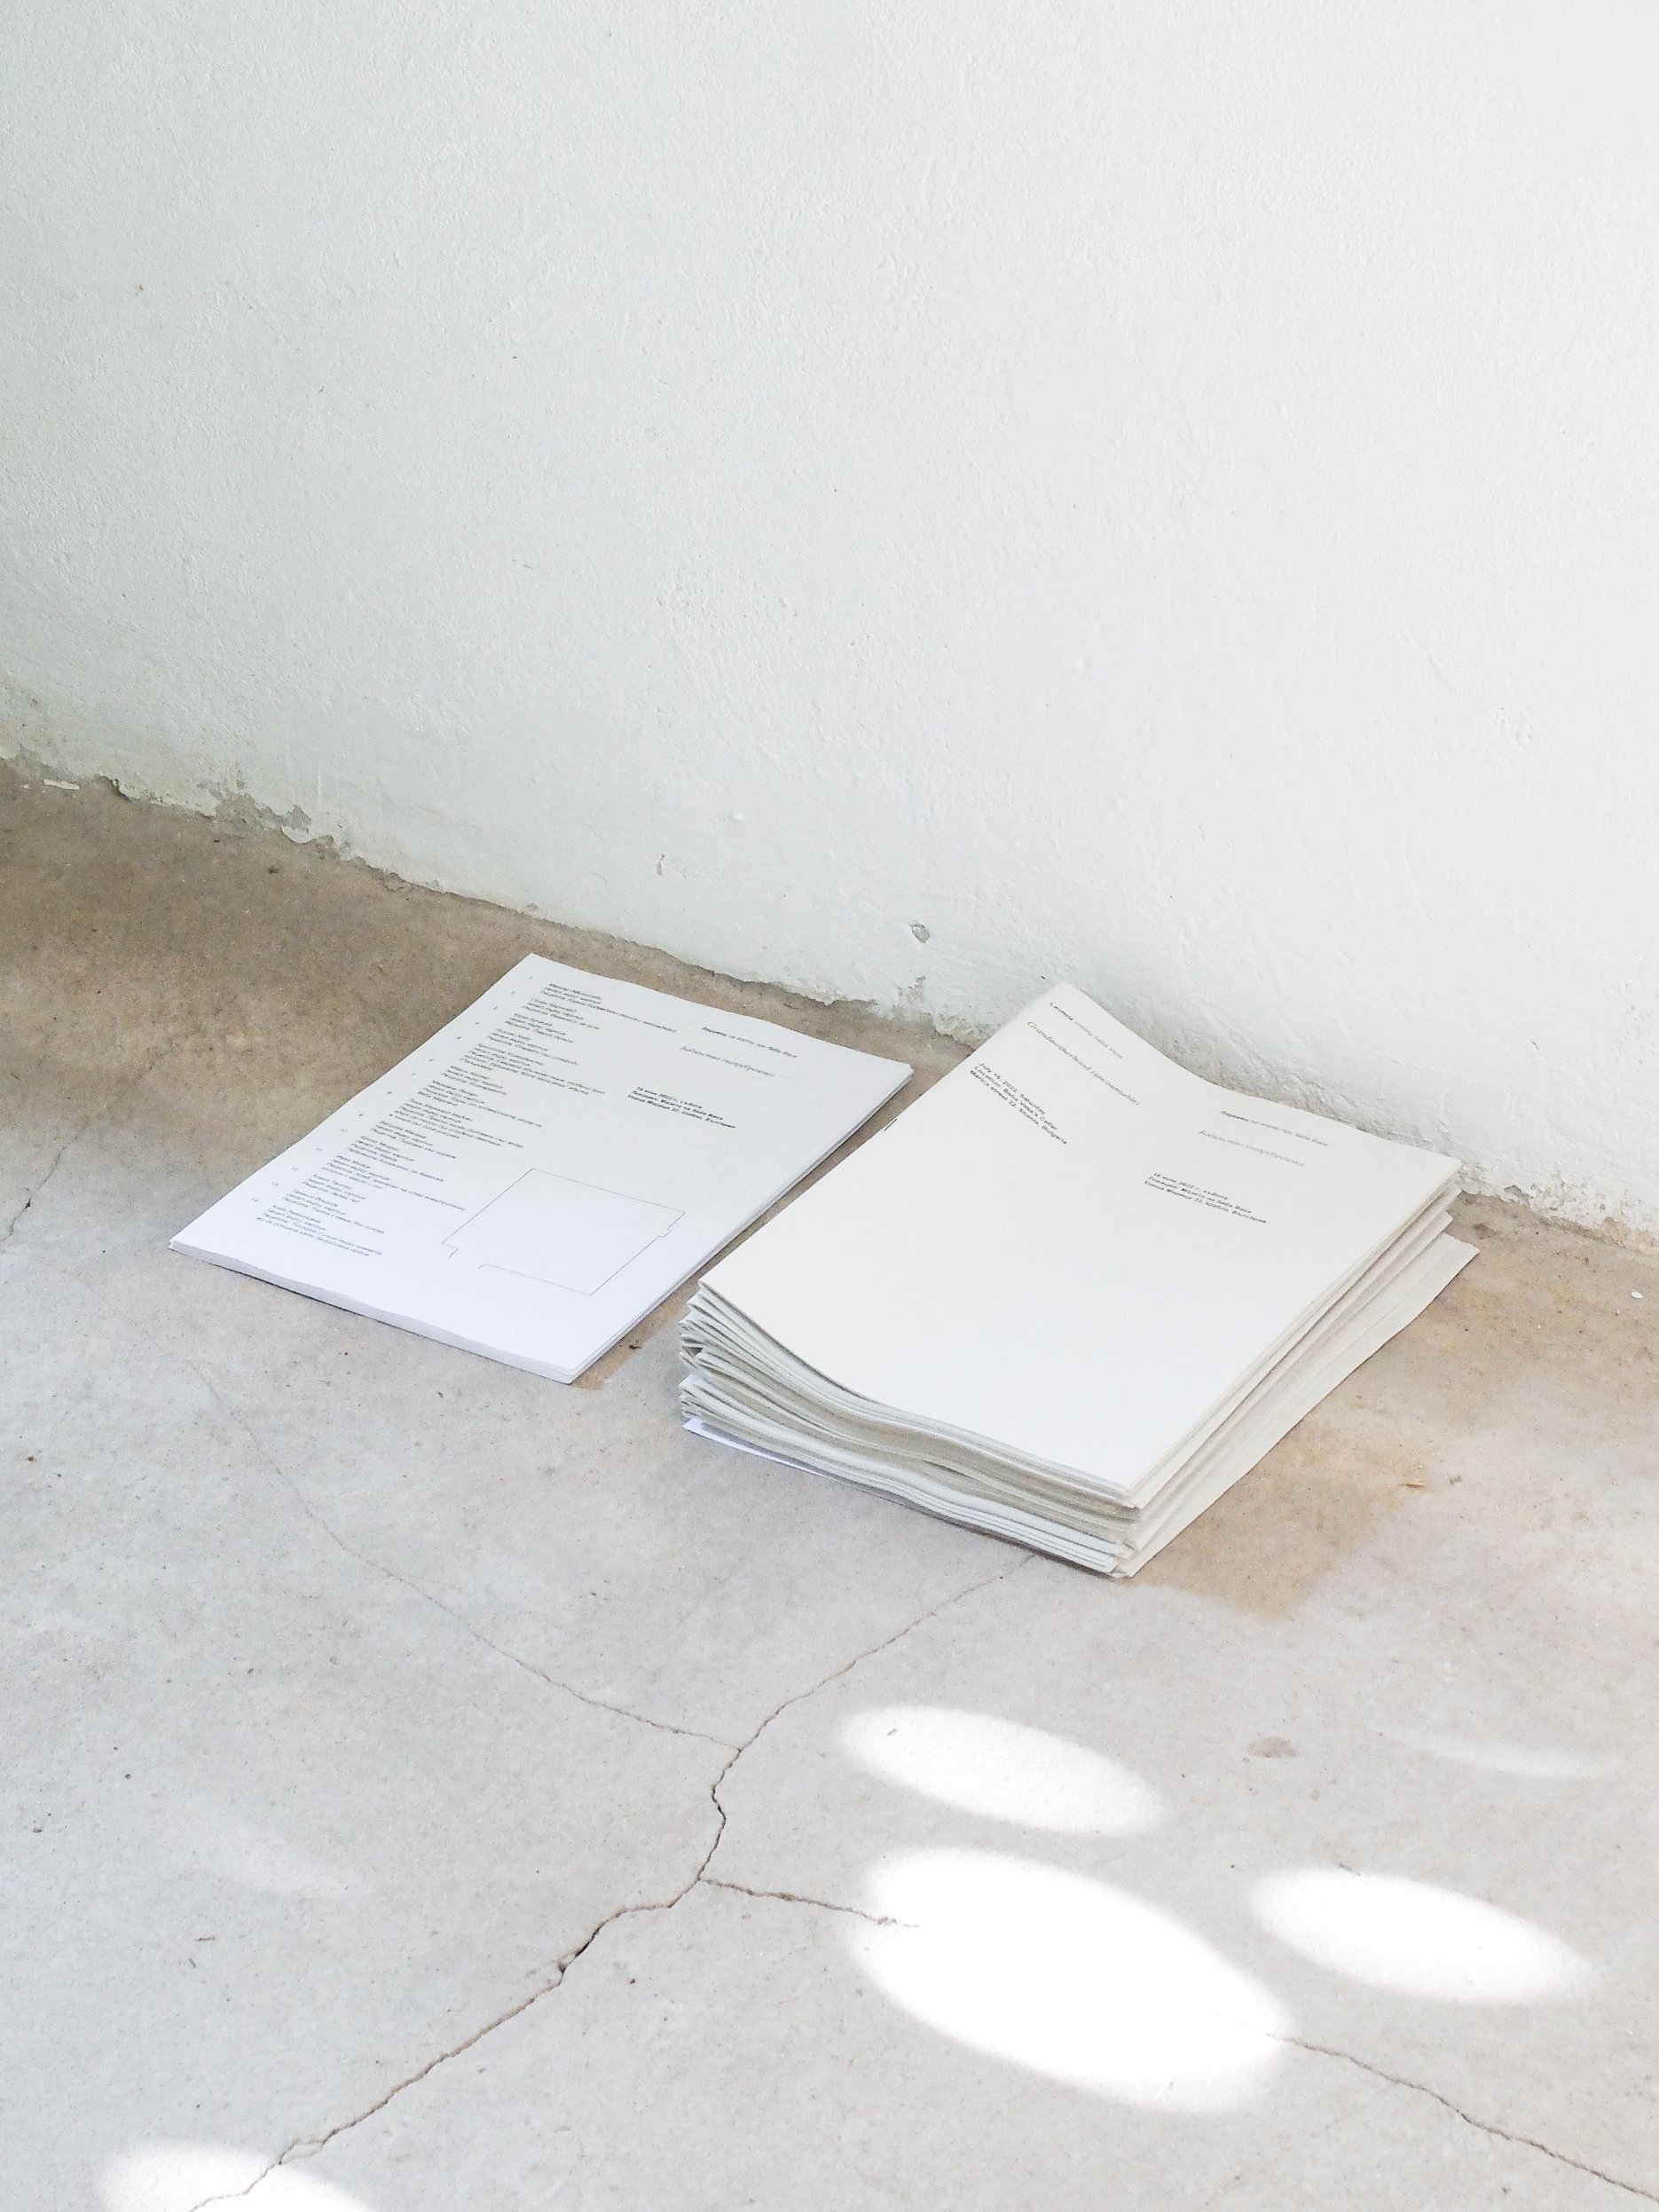   installation view (exhibition space), floor plan, printed matter  